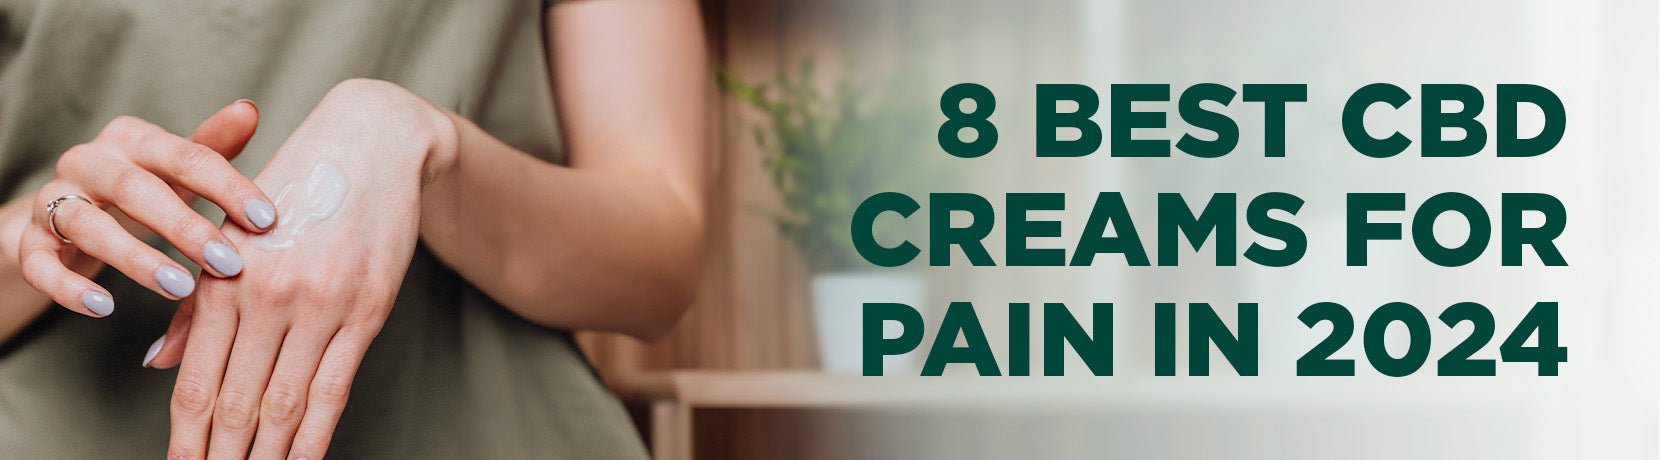 8 Best CBD Creams for Pain in 2024! - Shop CBD Kratom